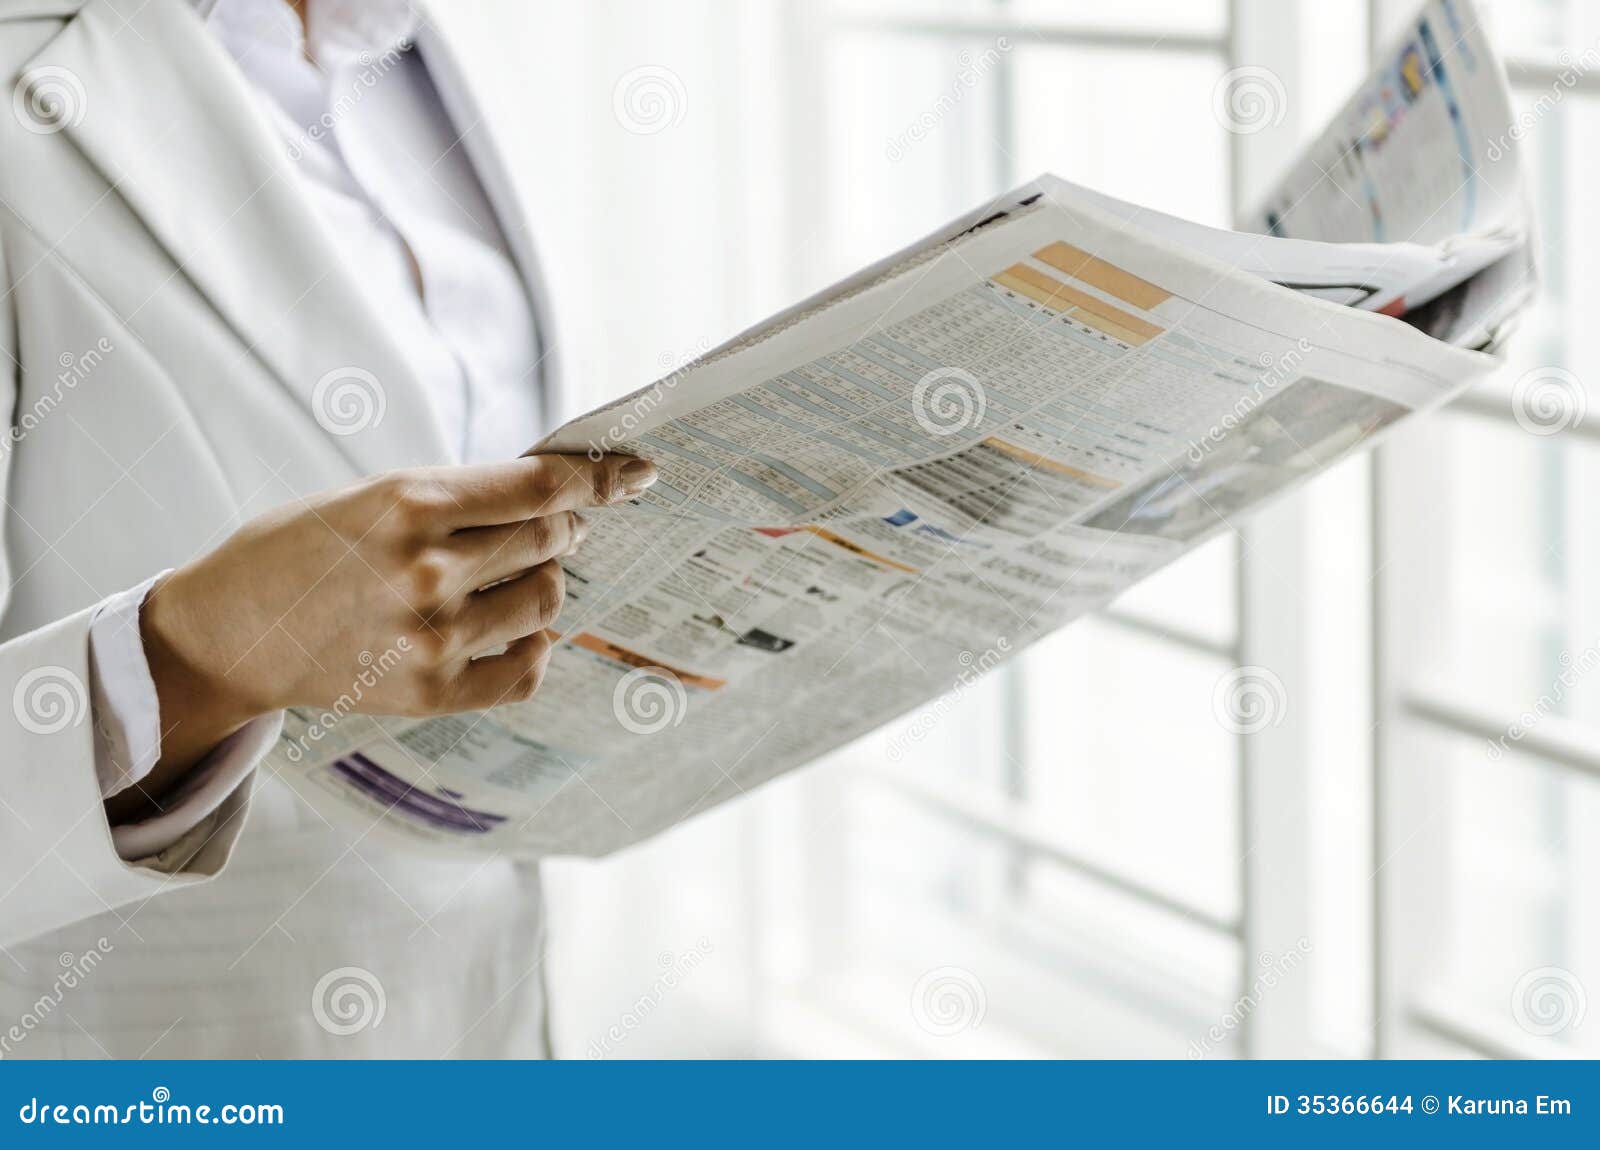 Reading printing media. Closeup woman hand holding newspaper